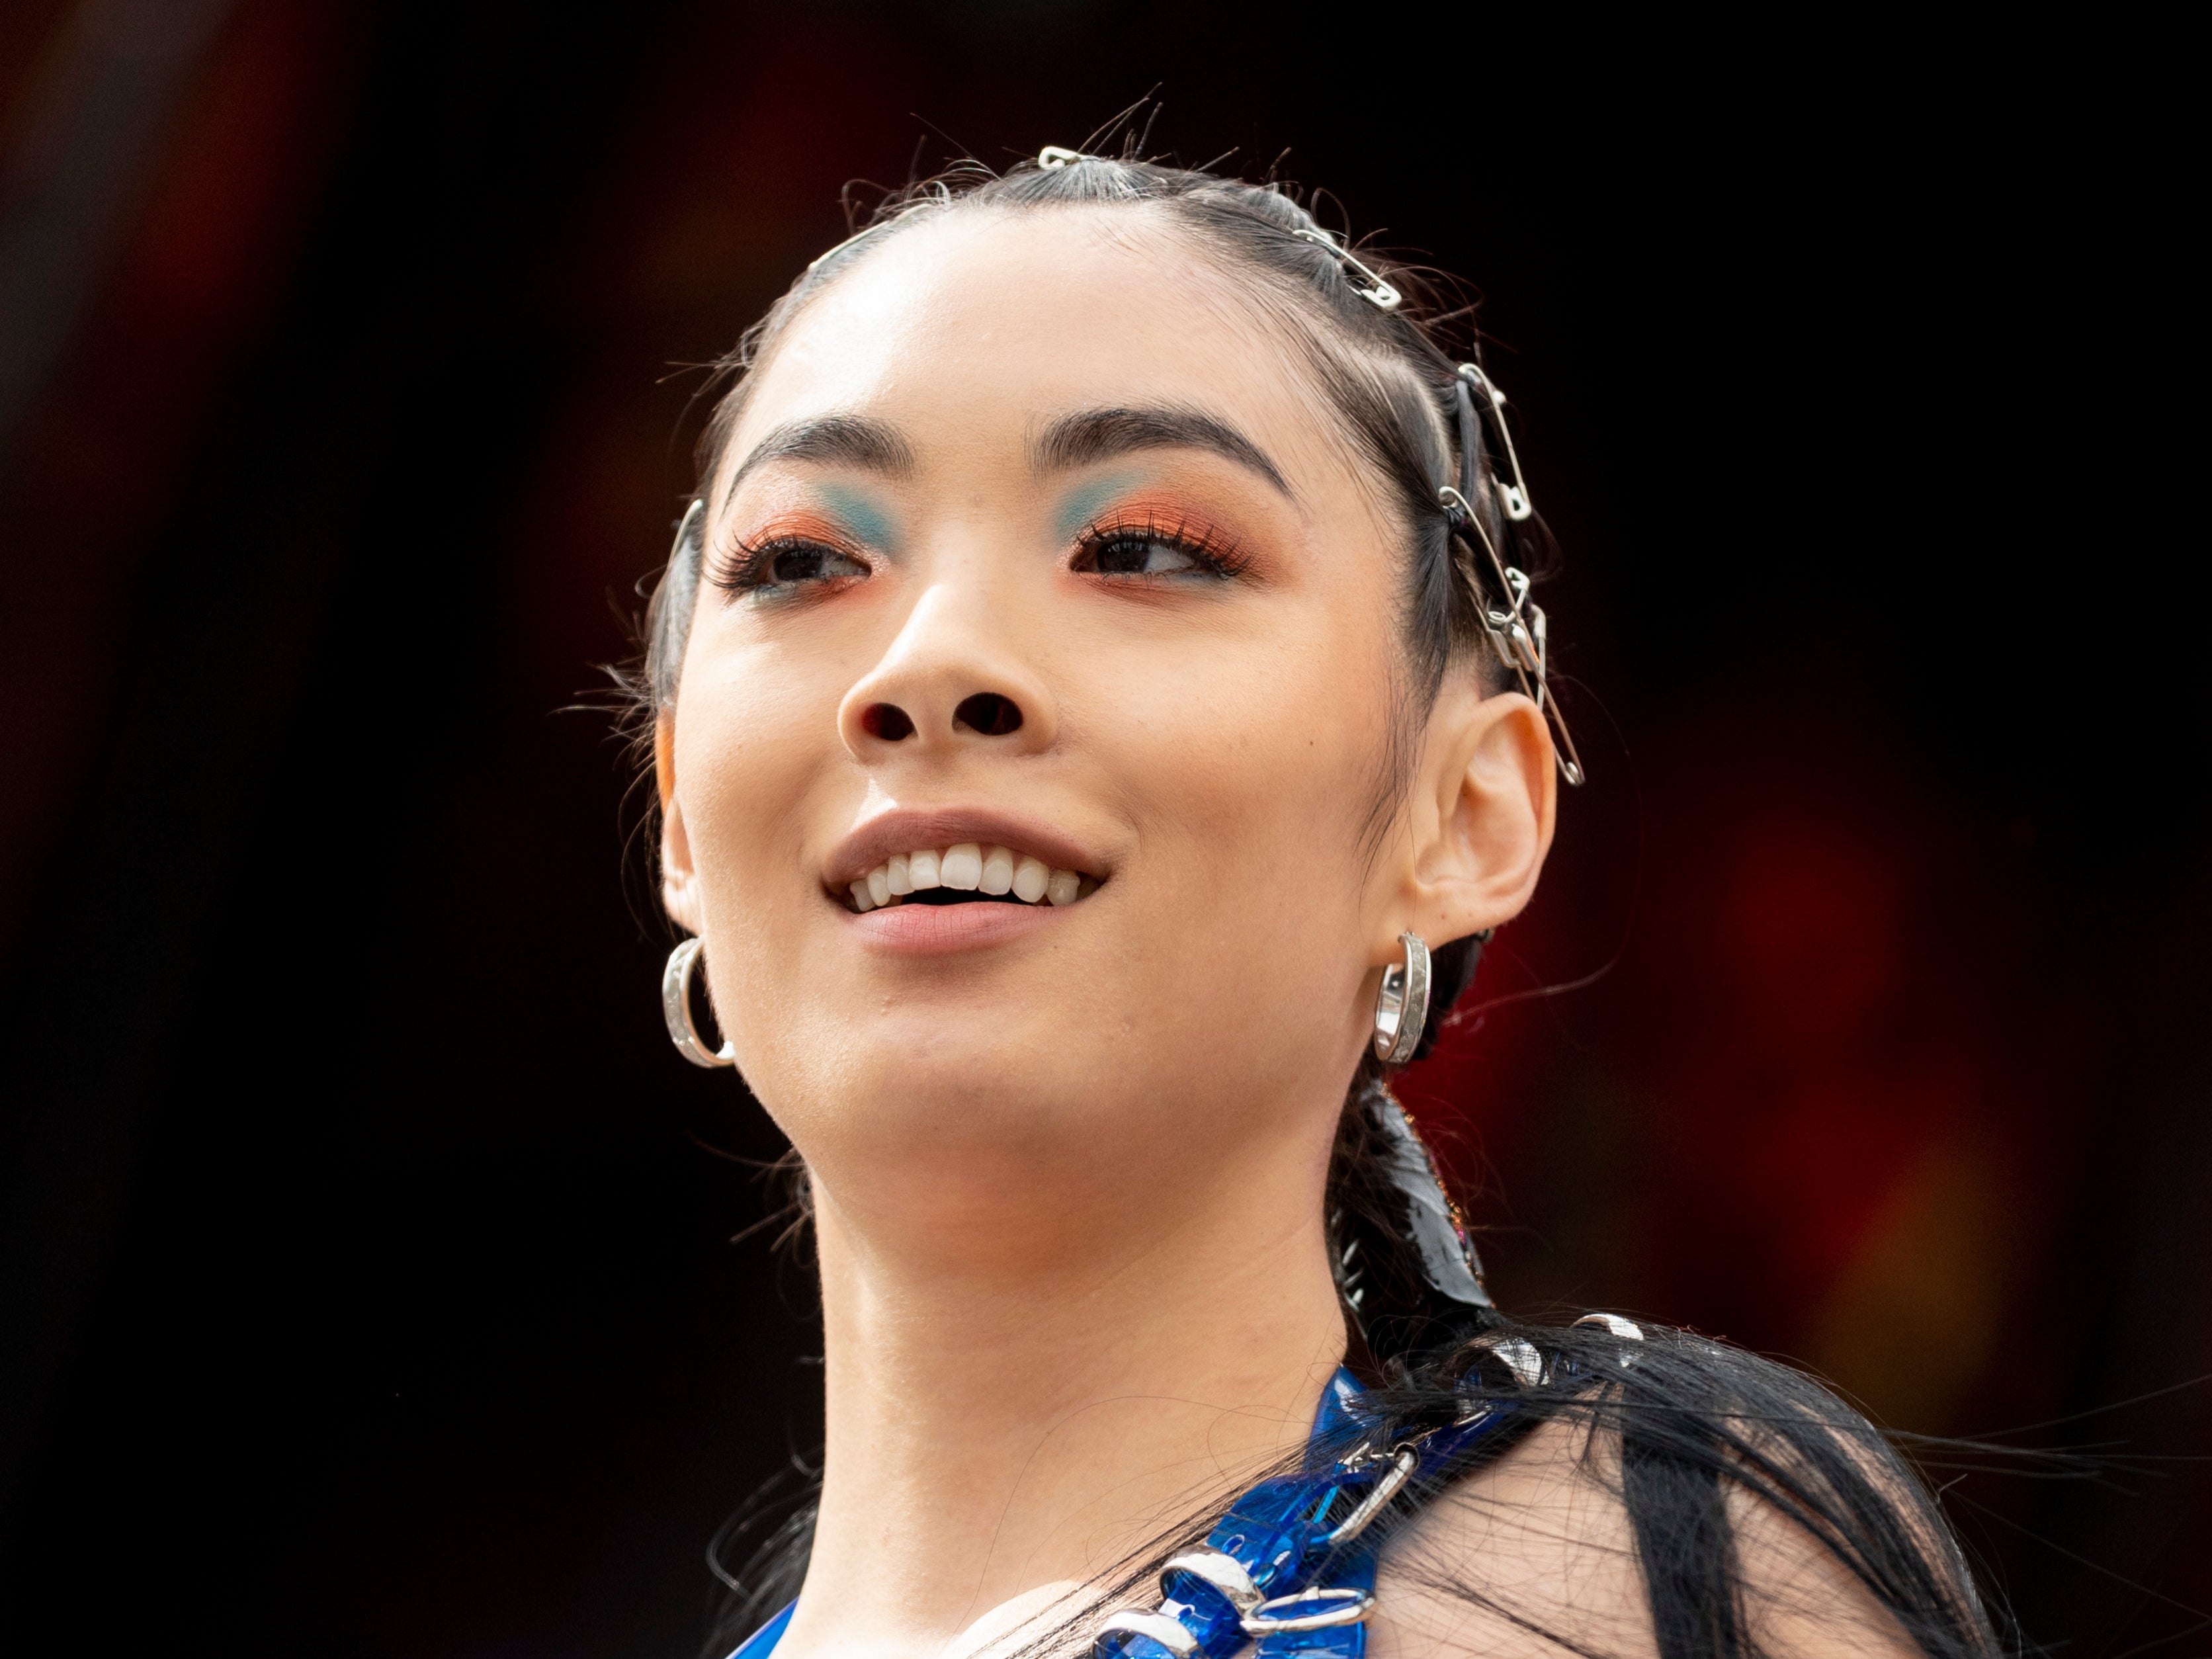 Sawayama on stage in 2019